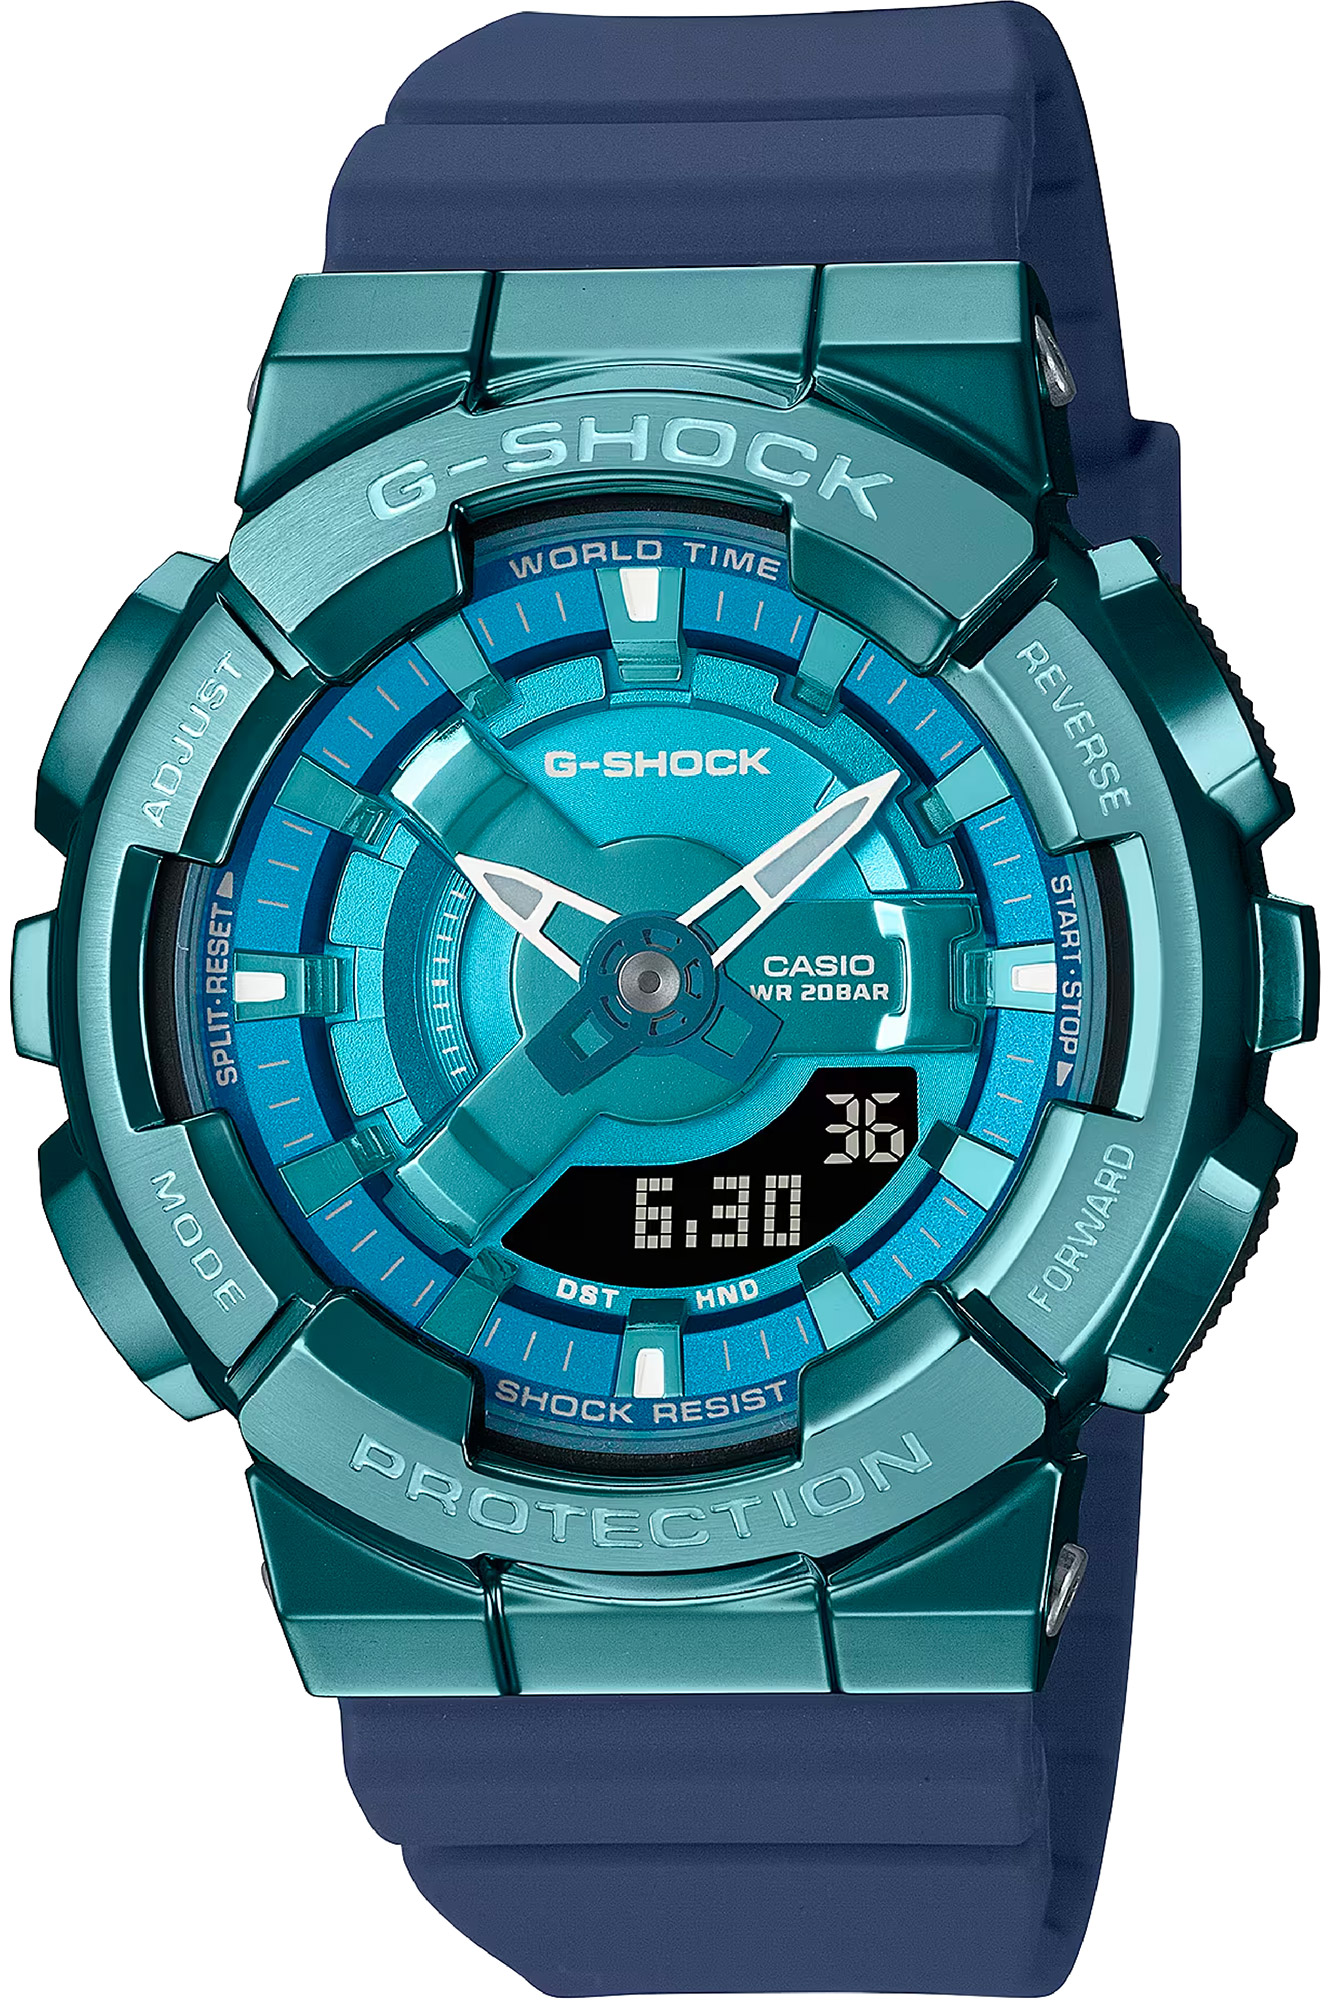 Watch CASIO G-Shock gm-s110lb-2aer